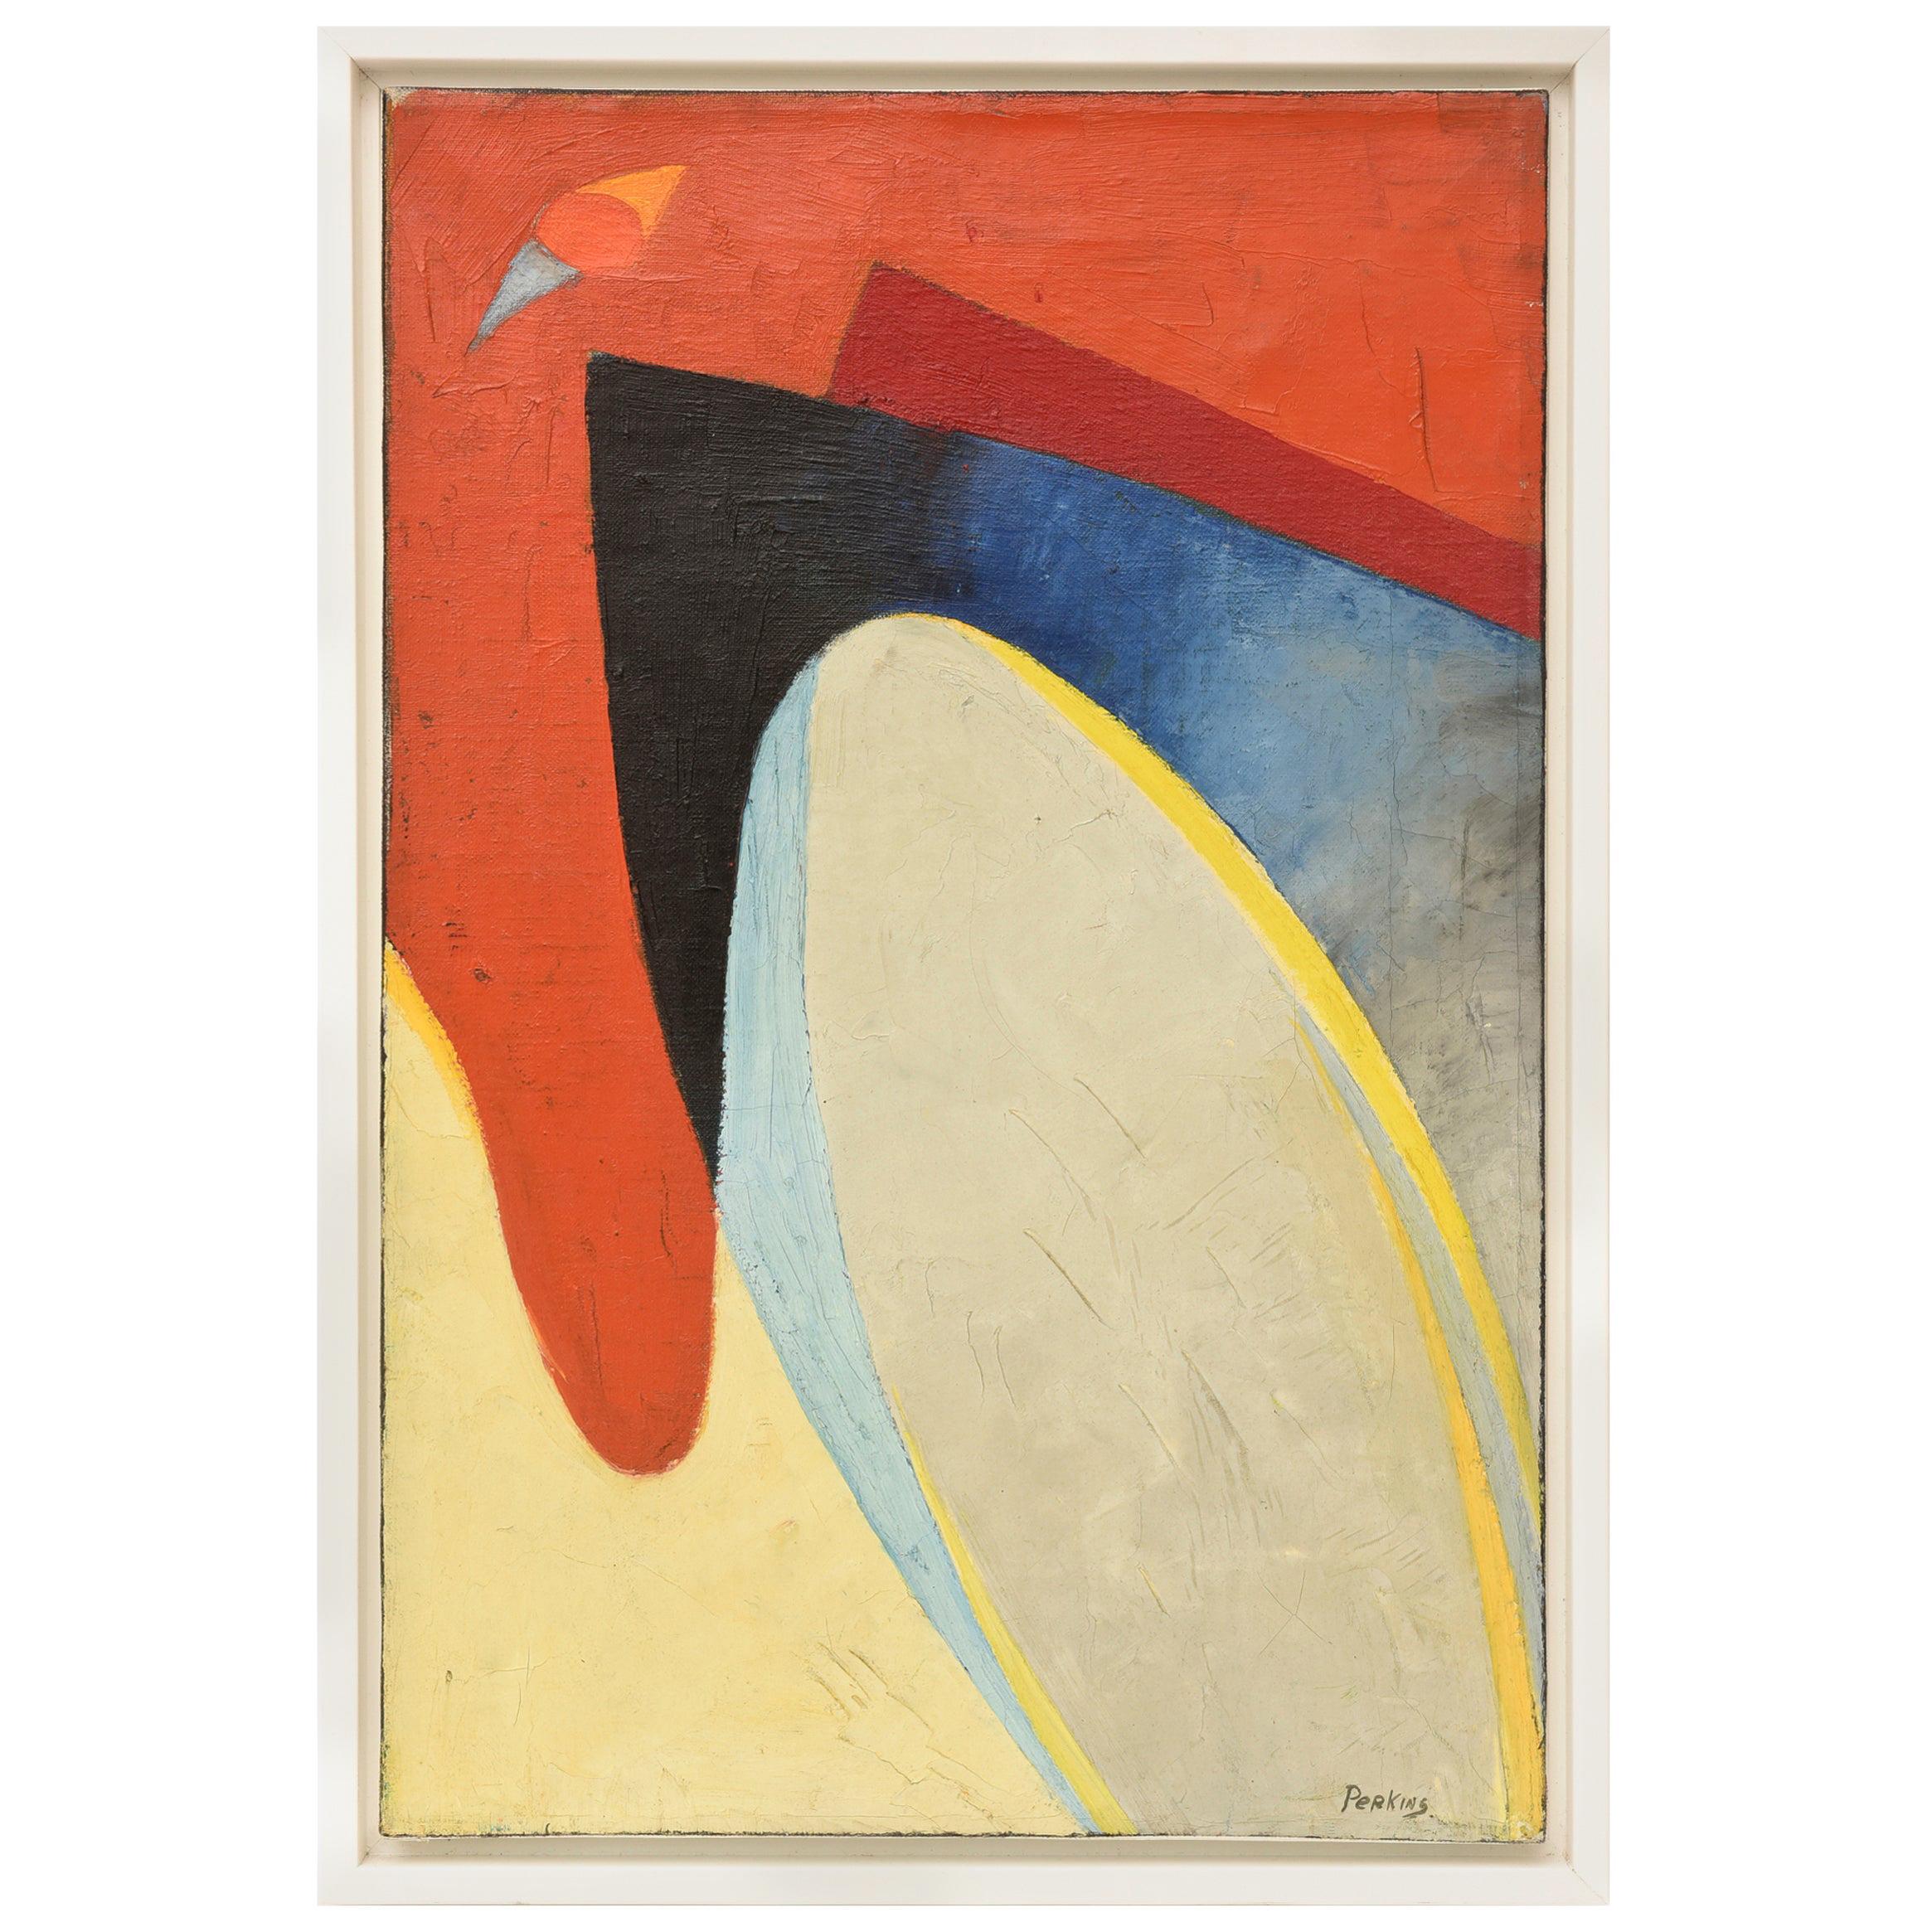 Peinture cubiste vintage signée Philip Perkins